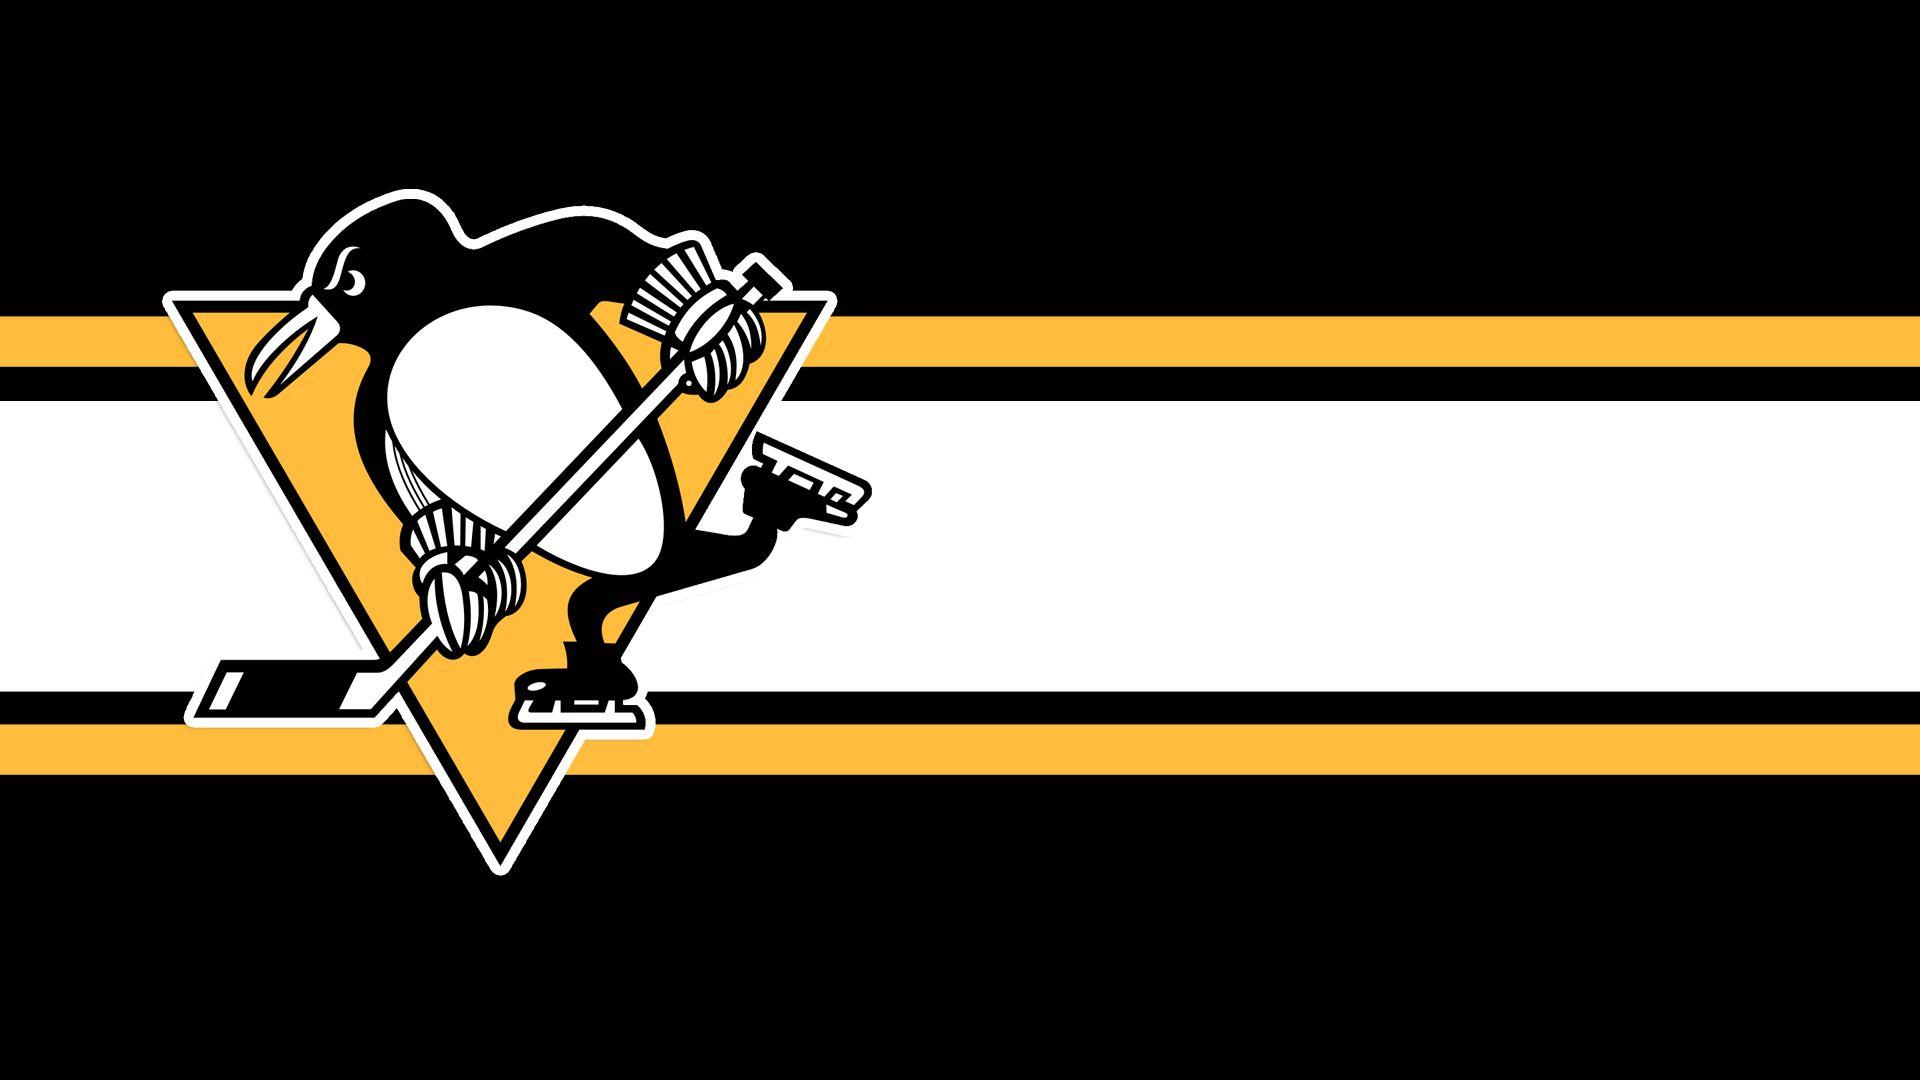 Penguins Hockey Logo - Images Pittsburgh Penguins Logo Wallpapers. | House ideas ...